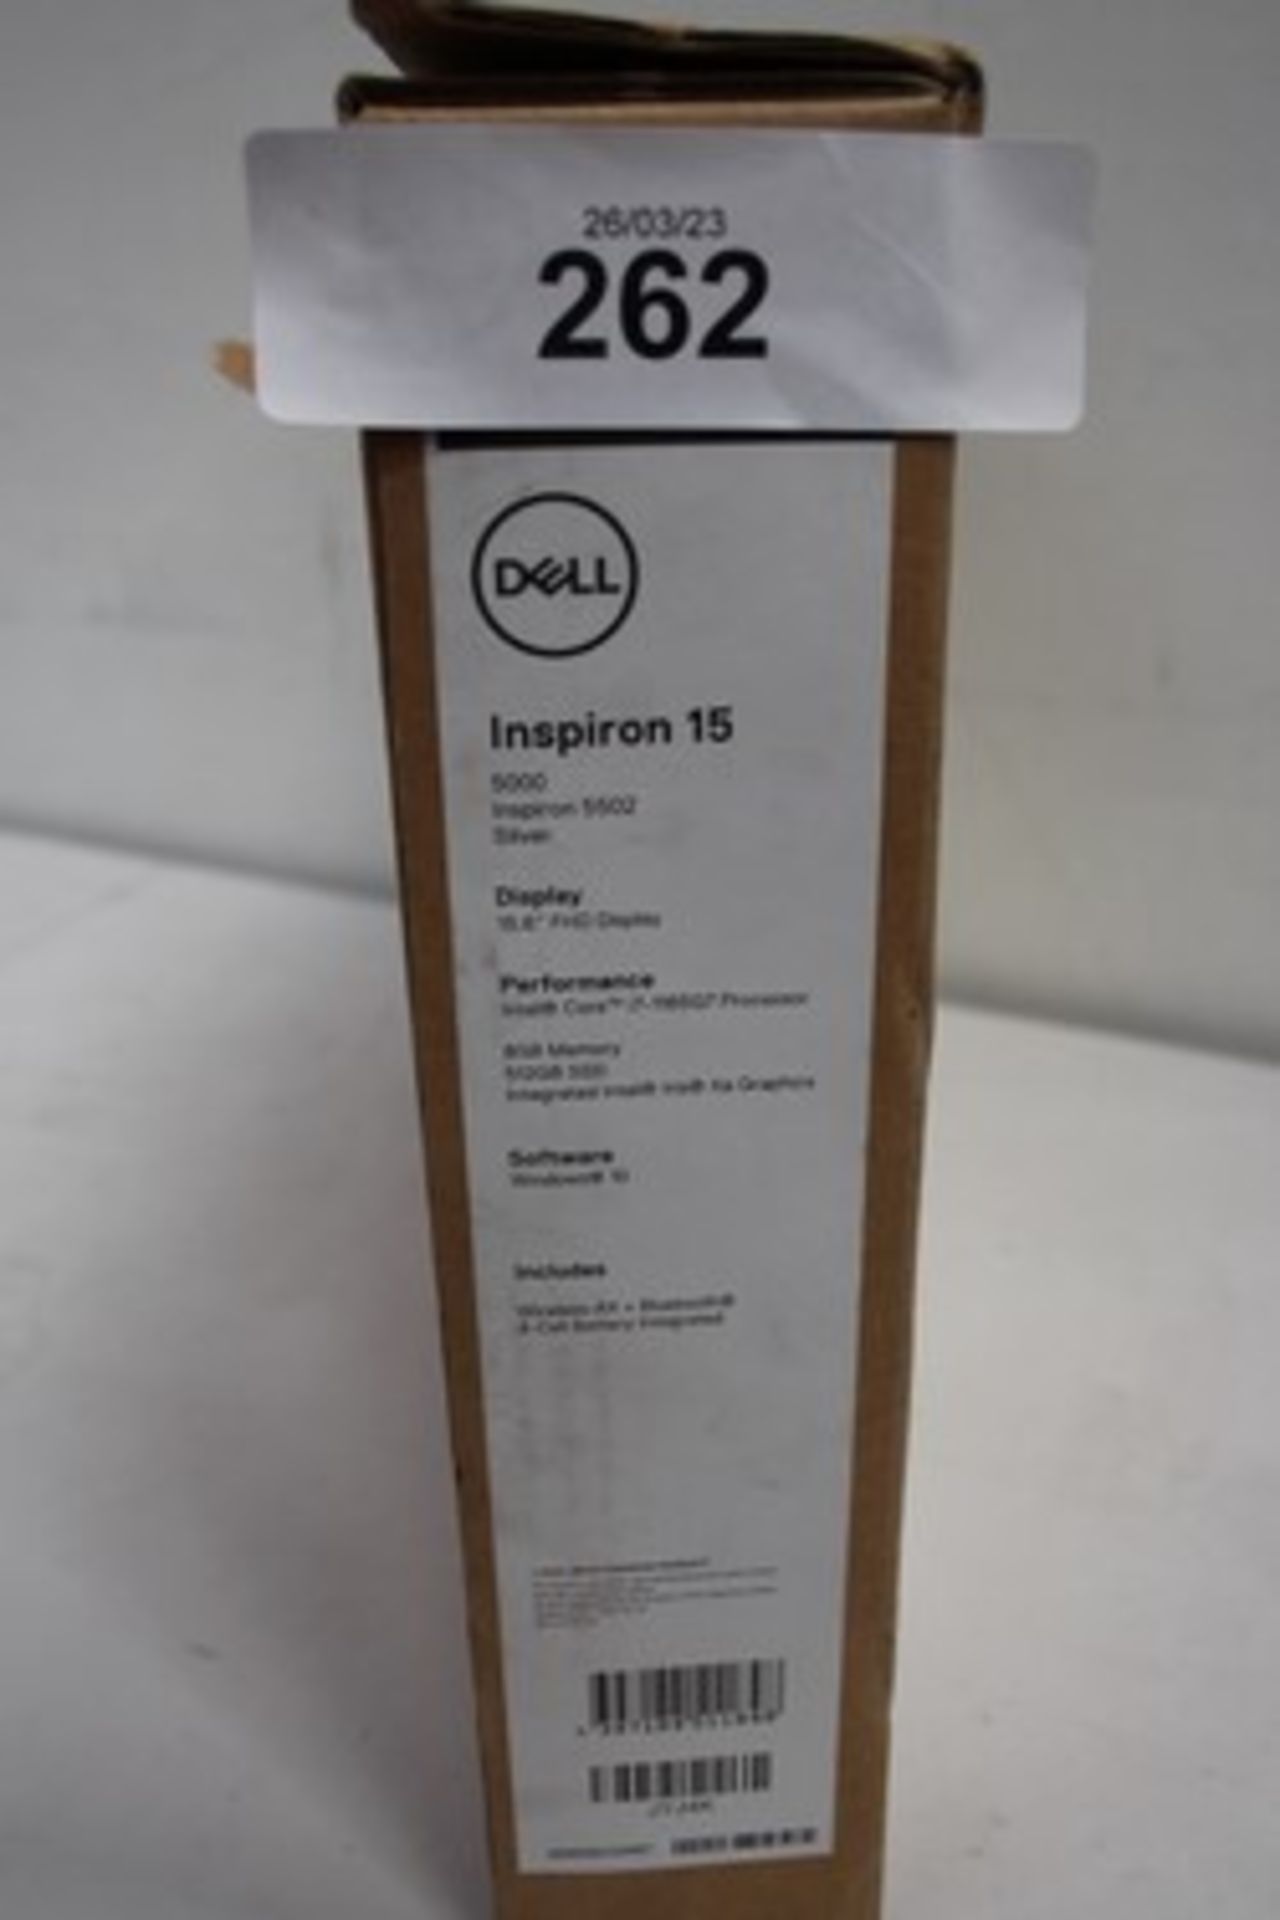 1 x Dell Inspiration 15 15 laptop 15.6" FHD Display, intel core i7 processor, 8GB memory, windows - Image 2 of 2